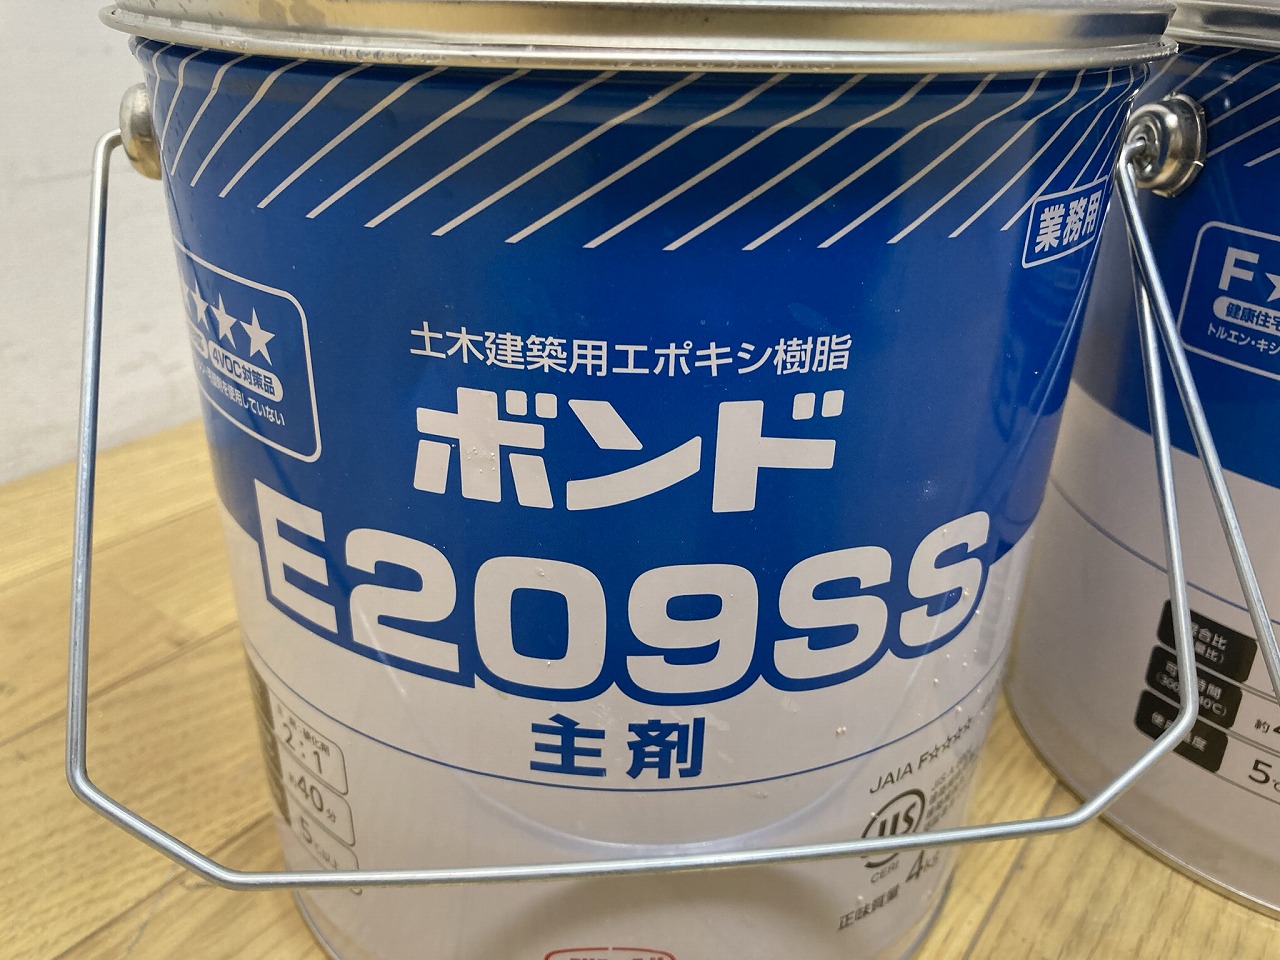 KONISHI コニシ ボンド 土木建築用エポキシ樹脂 4kg缶 E209SS 主剤 硬化剤セット 2セット 2021年6月 - リサイクル